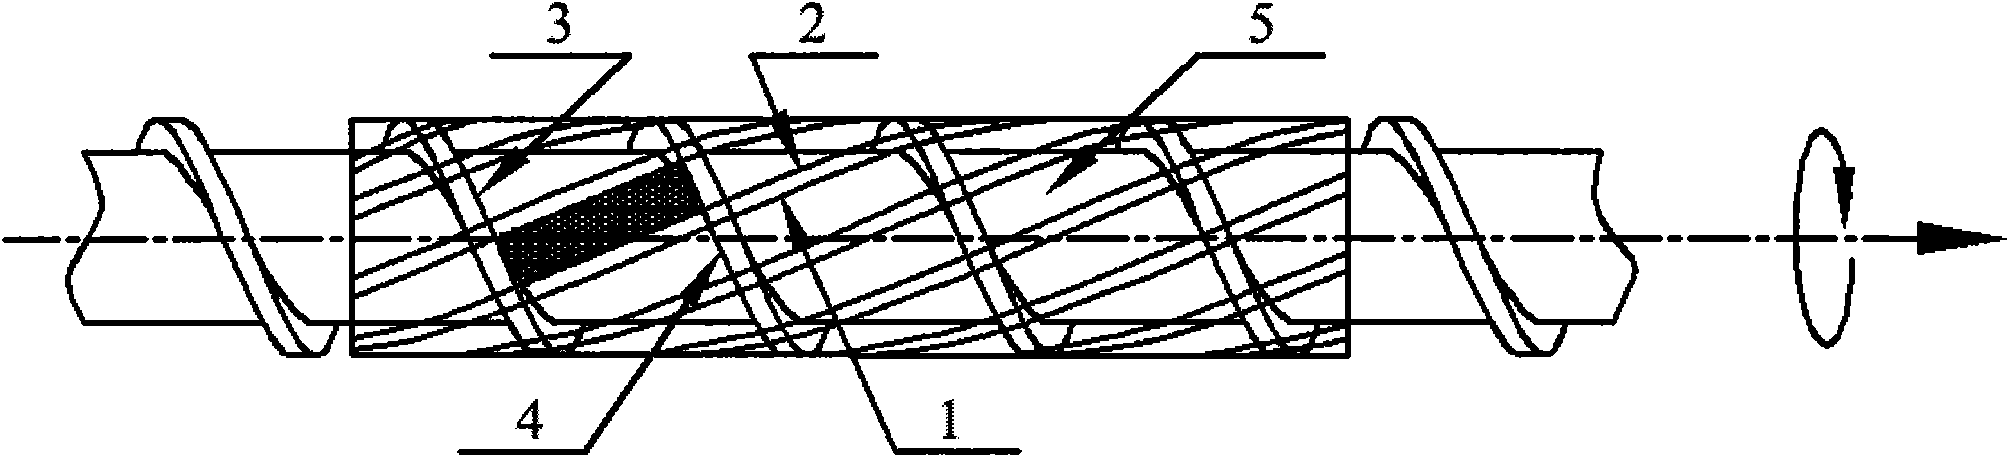 Single screw extruder on basis of double screw edge push conveying